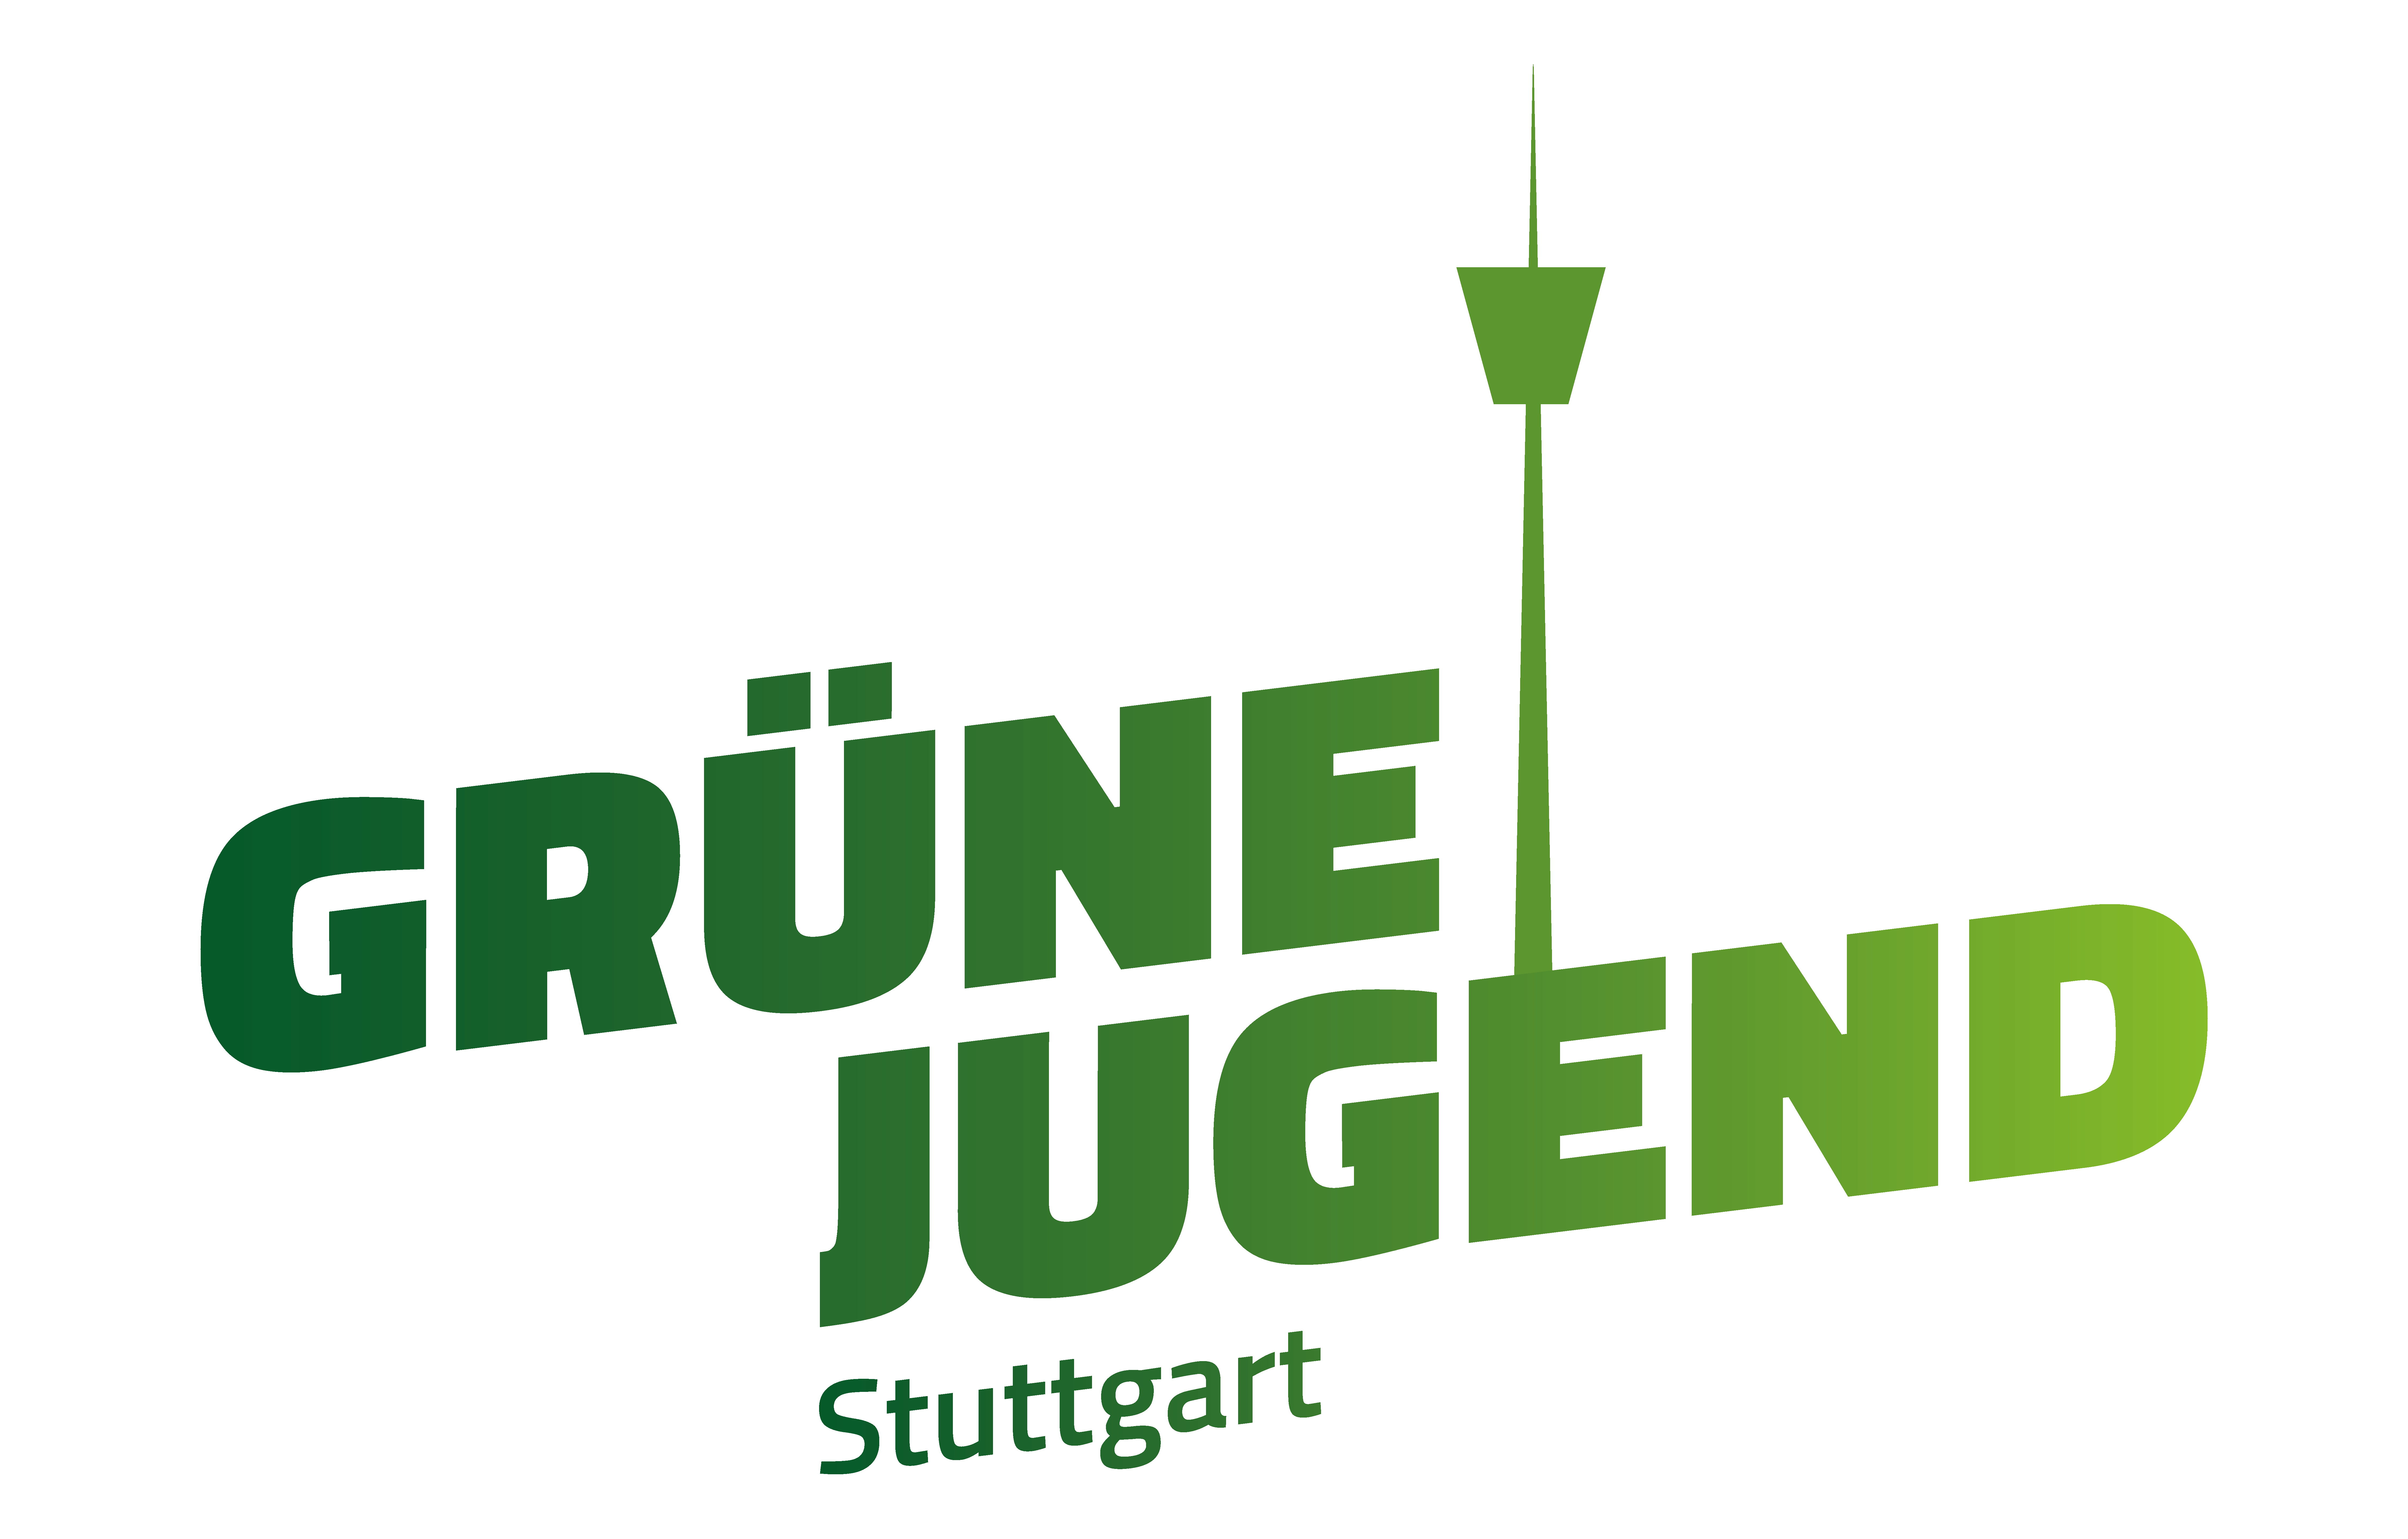 Grüne Jugend Stuttgart